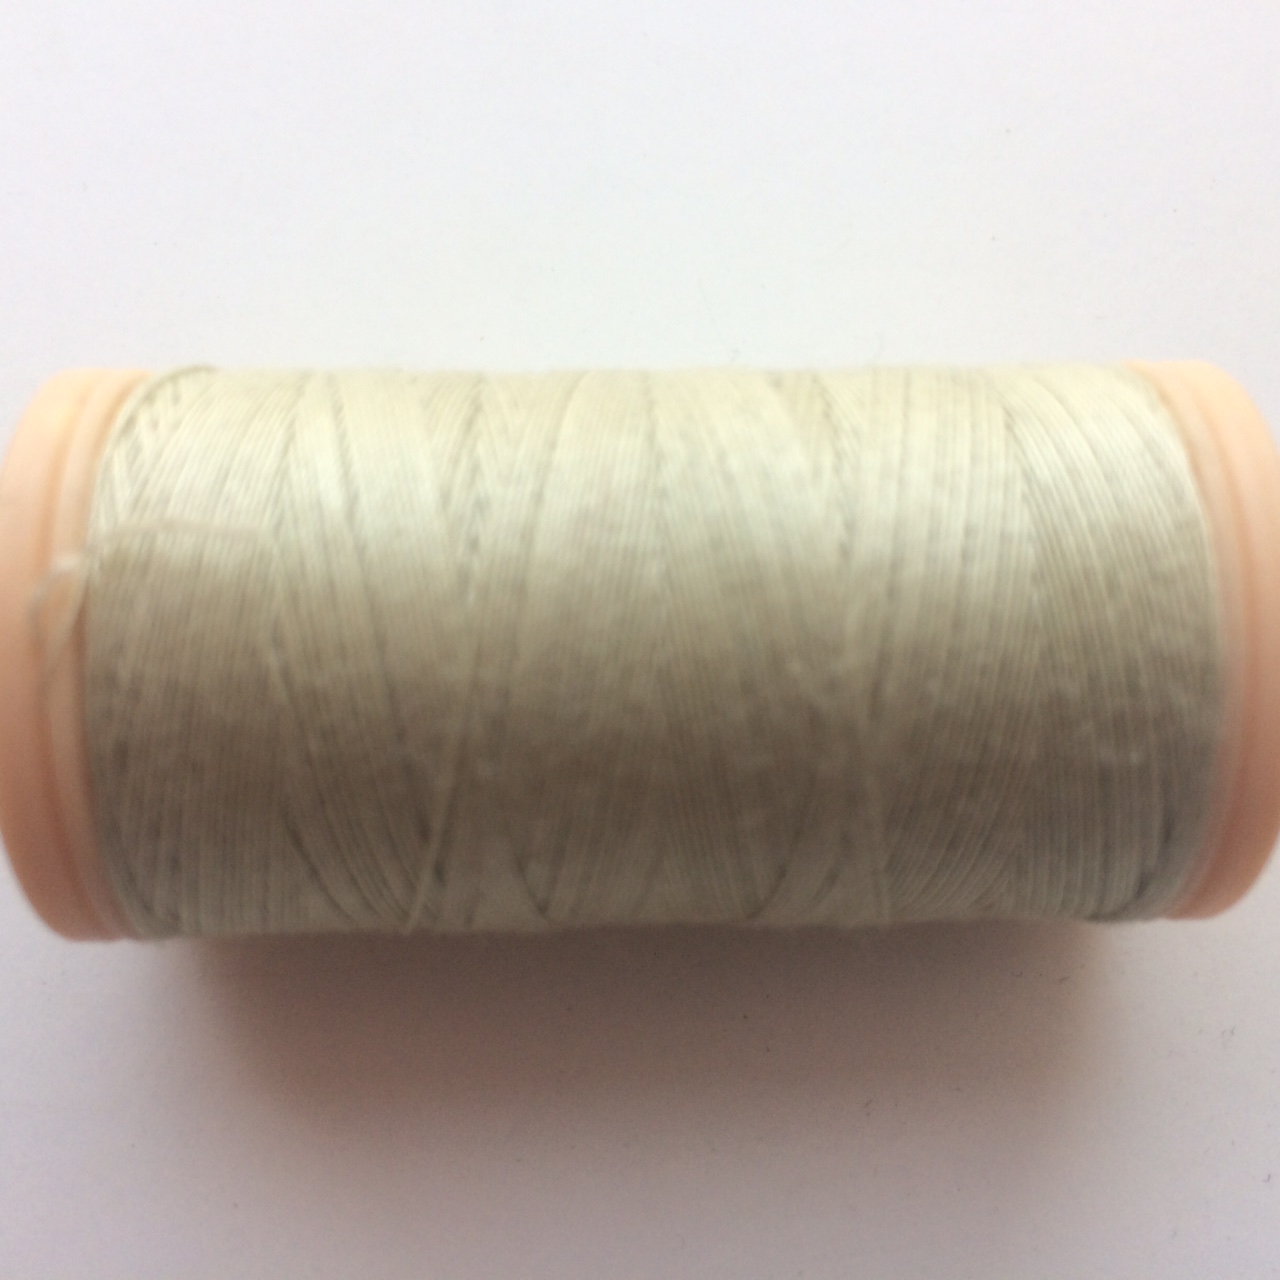 Nähfaden COATS Cotton merc. 50/100m Farbe 2324